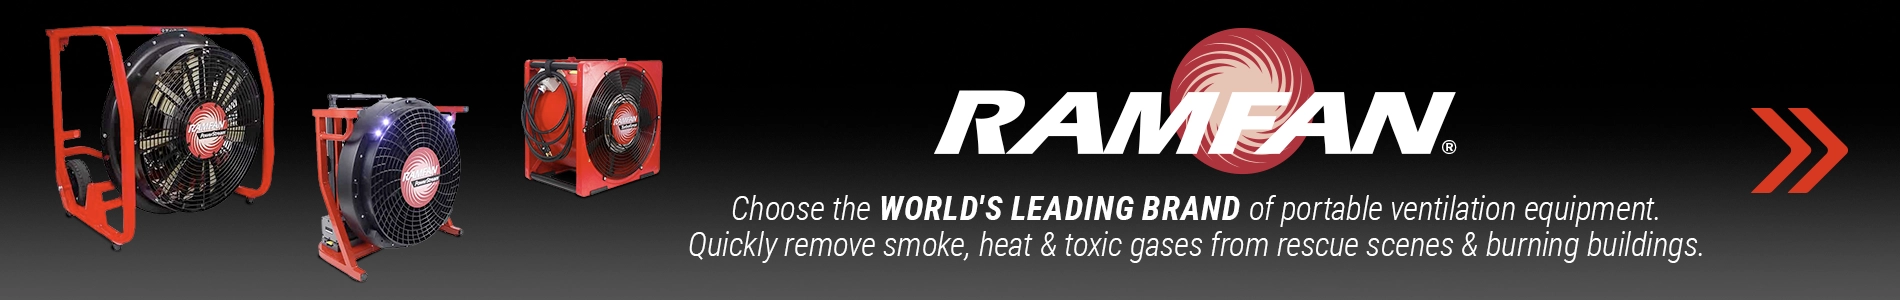 RAMFAN - Worlds Leading Brand of Portable Ventilation Equipment